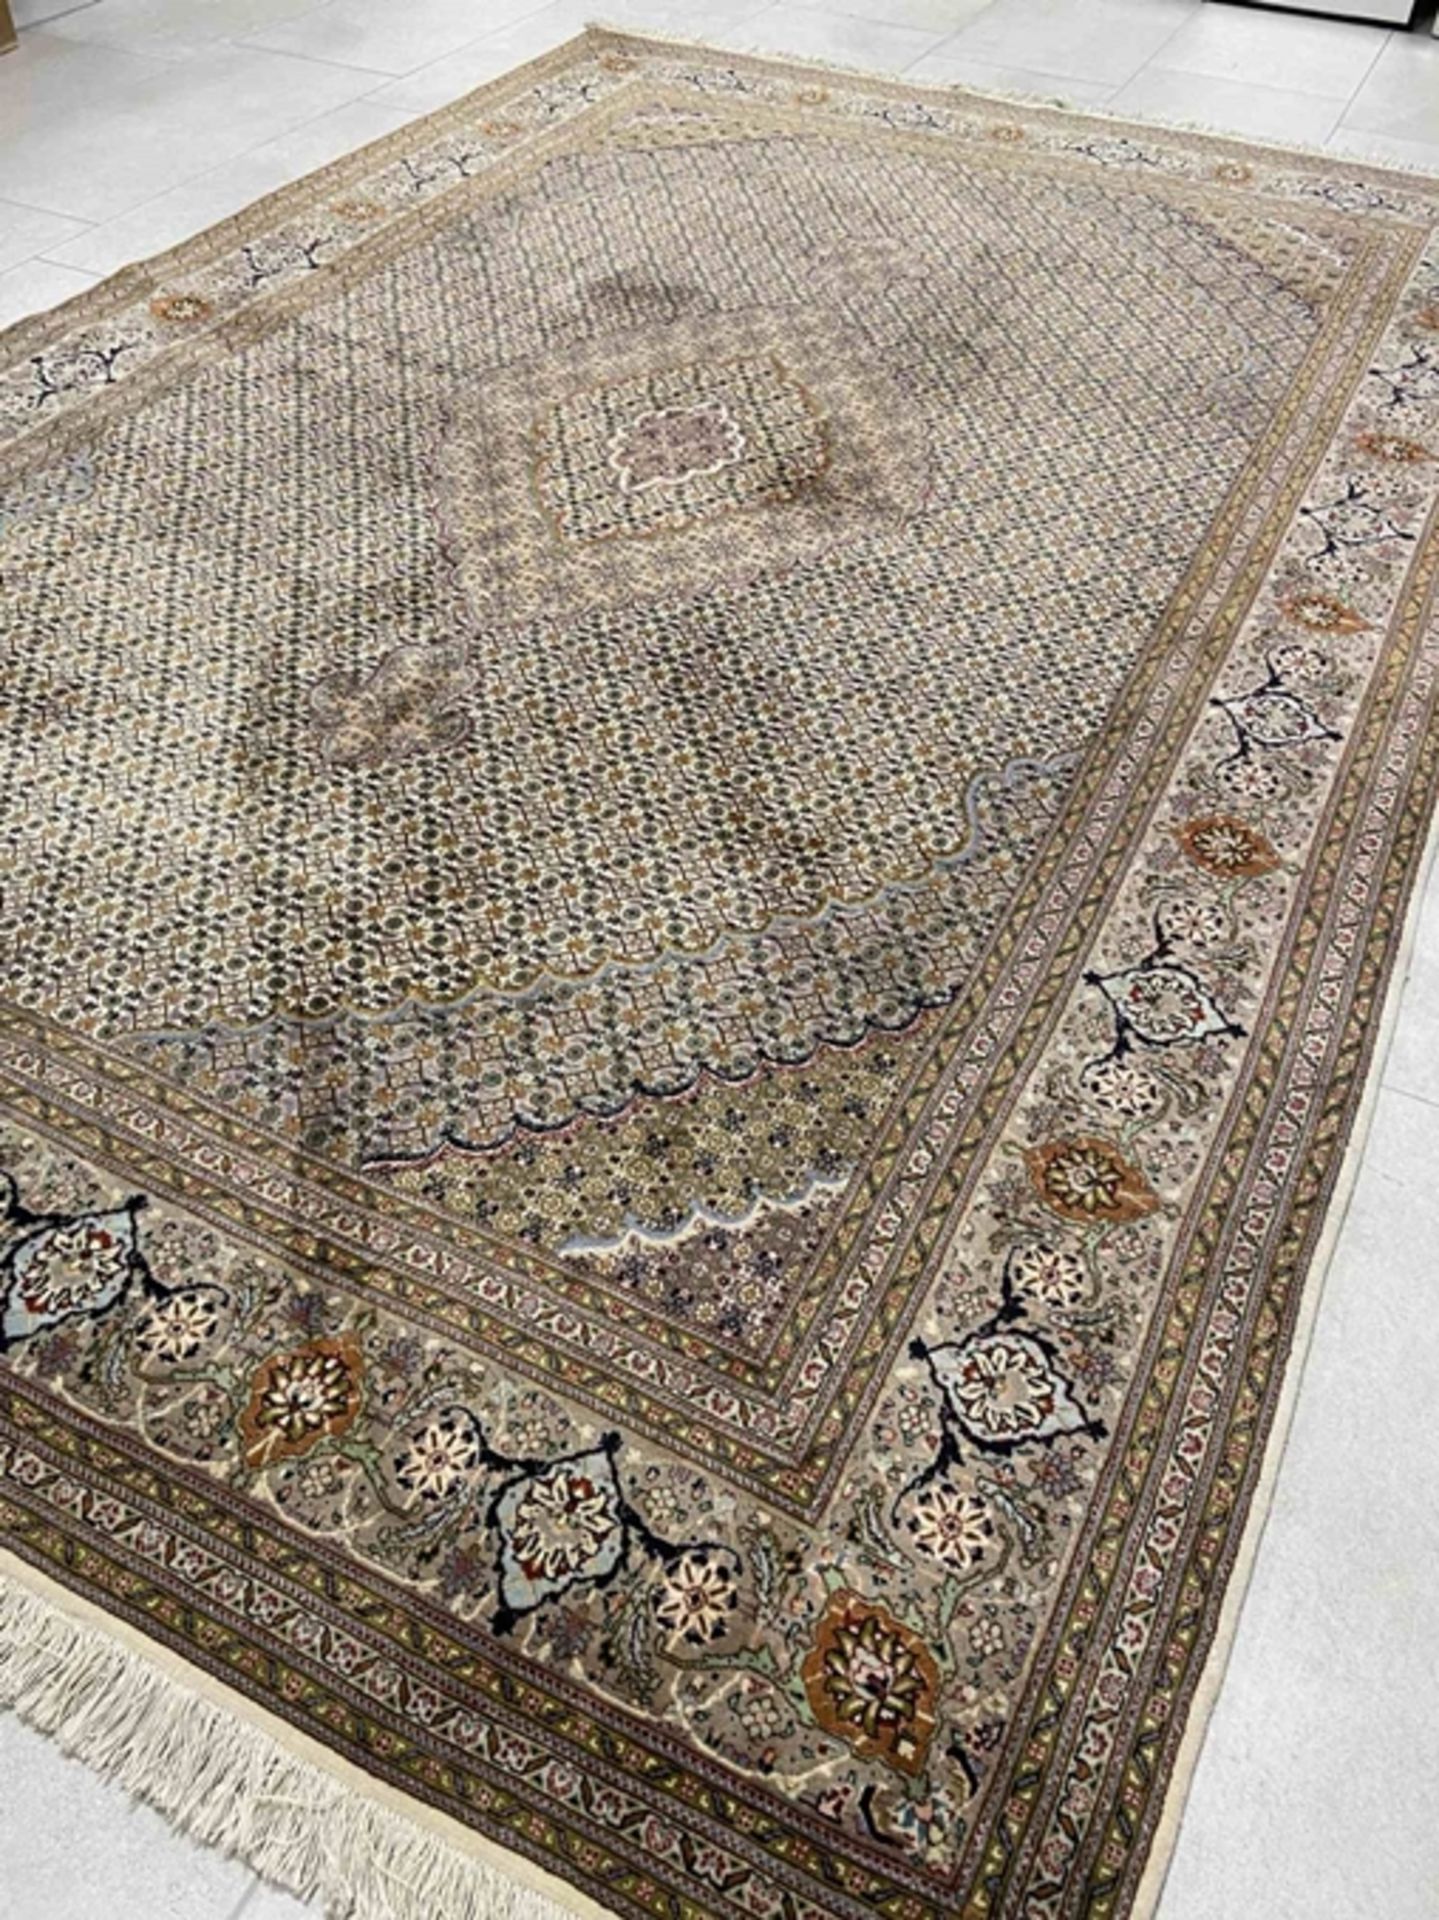 Tabriz Persian carpet, cork wool with silk, 50 Raj - 300 x 200cm - Image 3 of 5